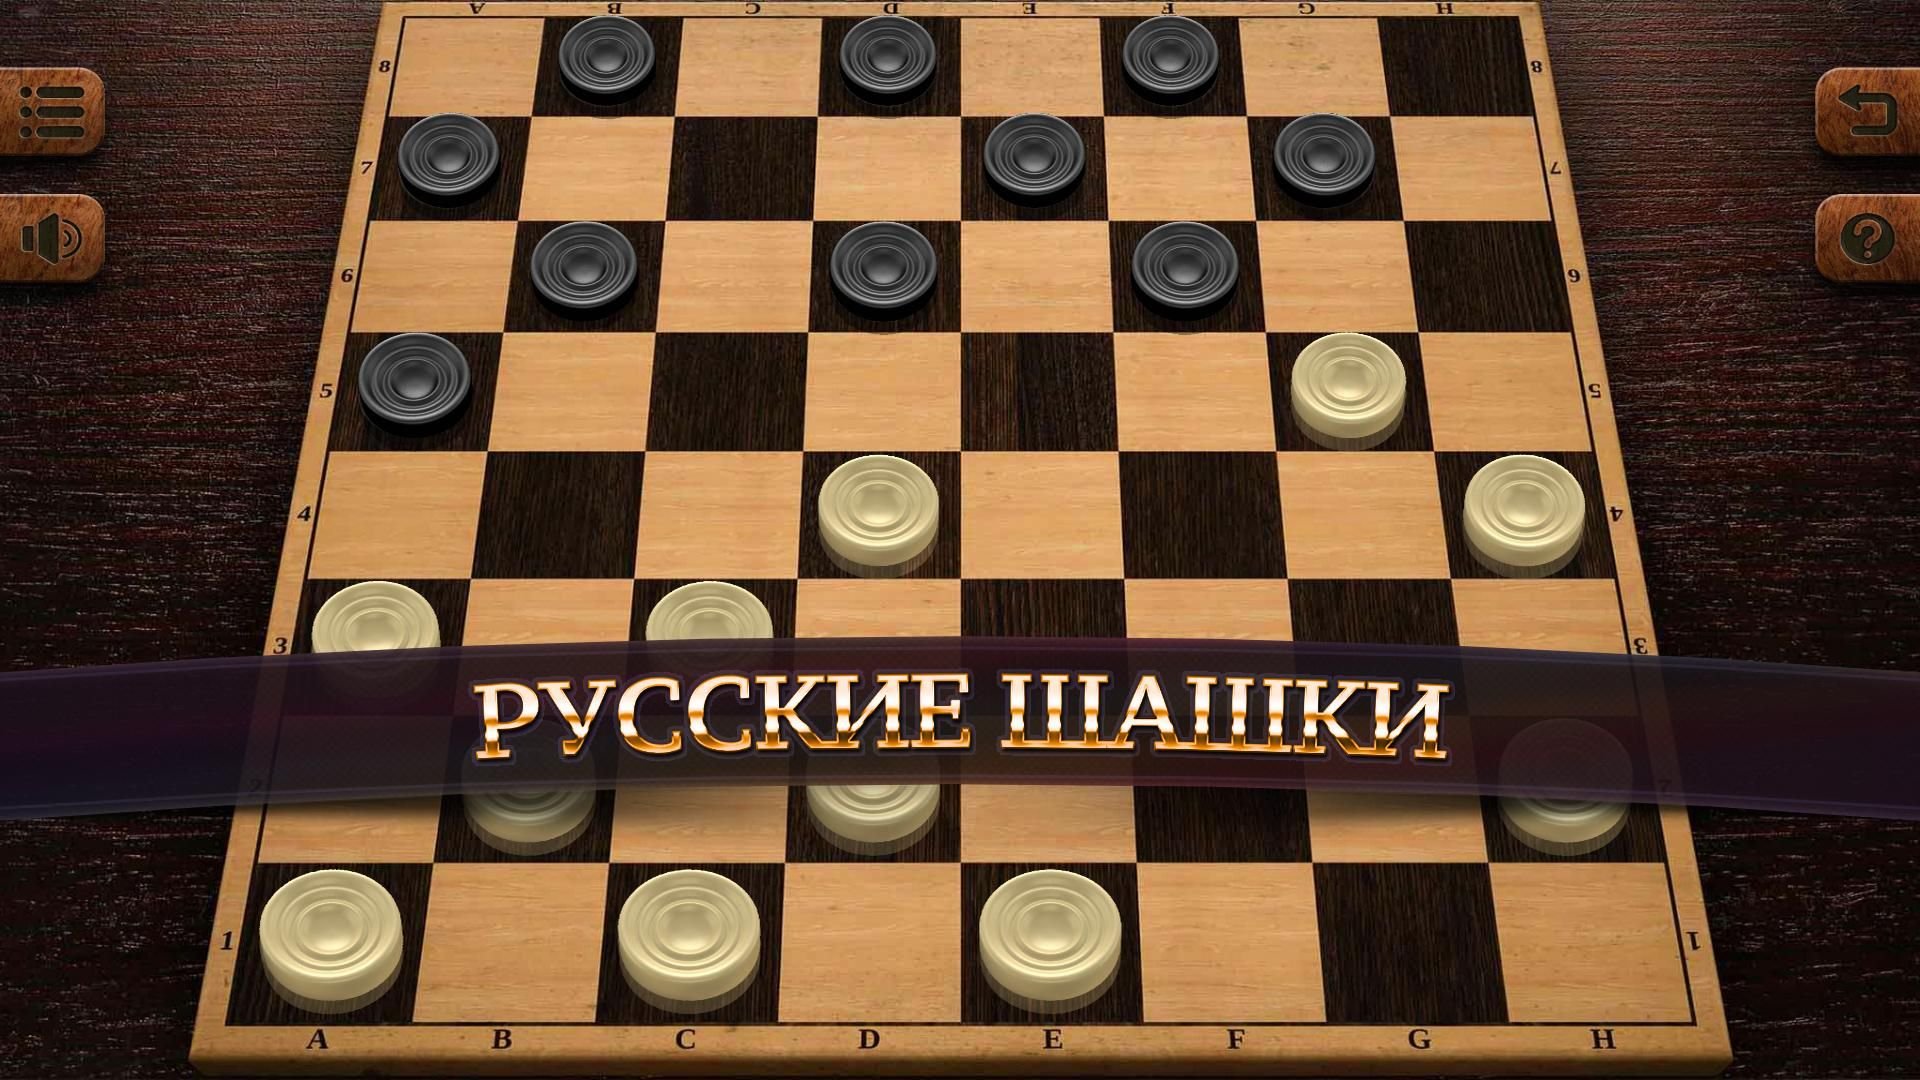 Включи играть в шашки. Русские шашки 8.1.50. Чекерс шашки. Русские шашки 3.11.